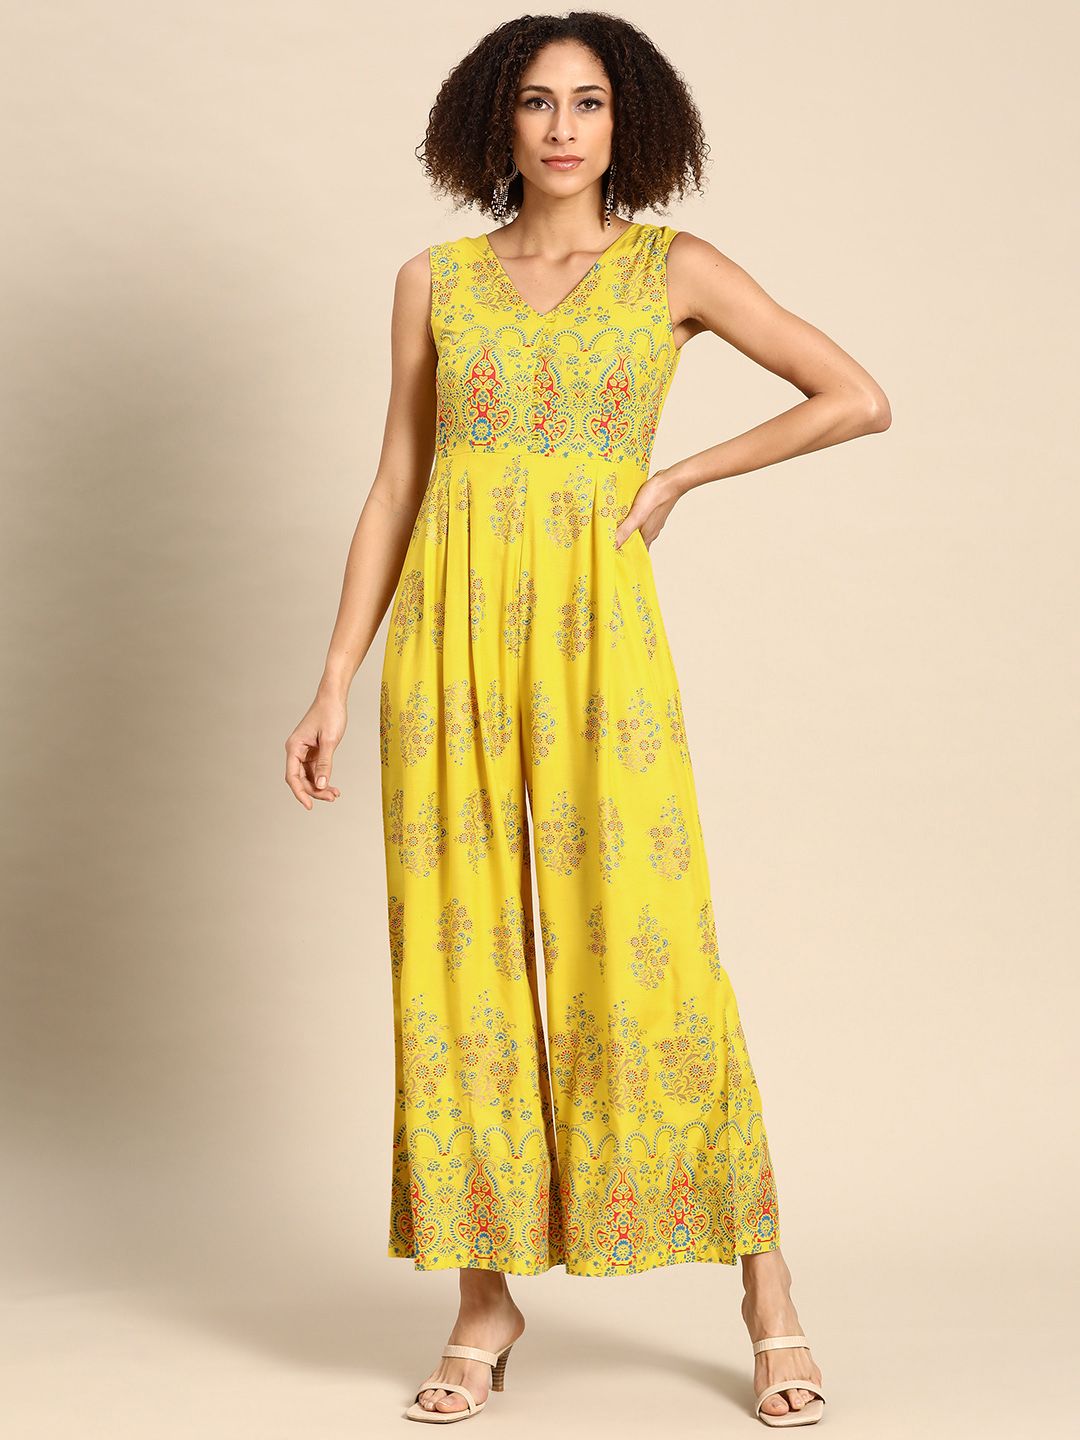 MABISH by Sonal Jain Yellow & Orange Printed Pleated Jumpsuit Price in India